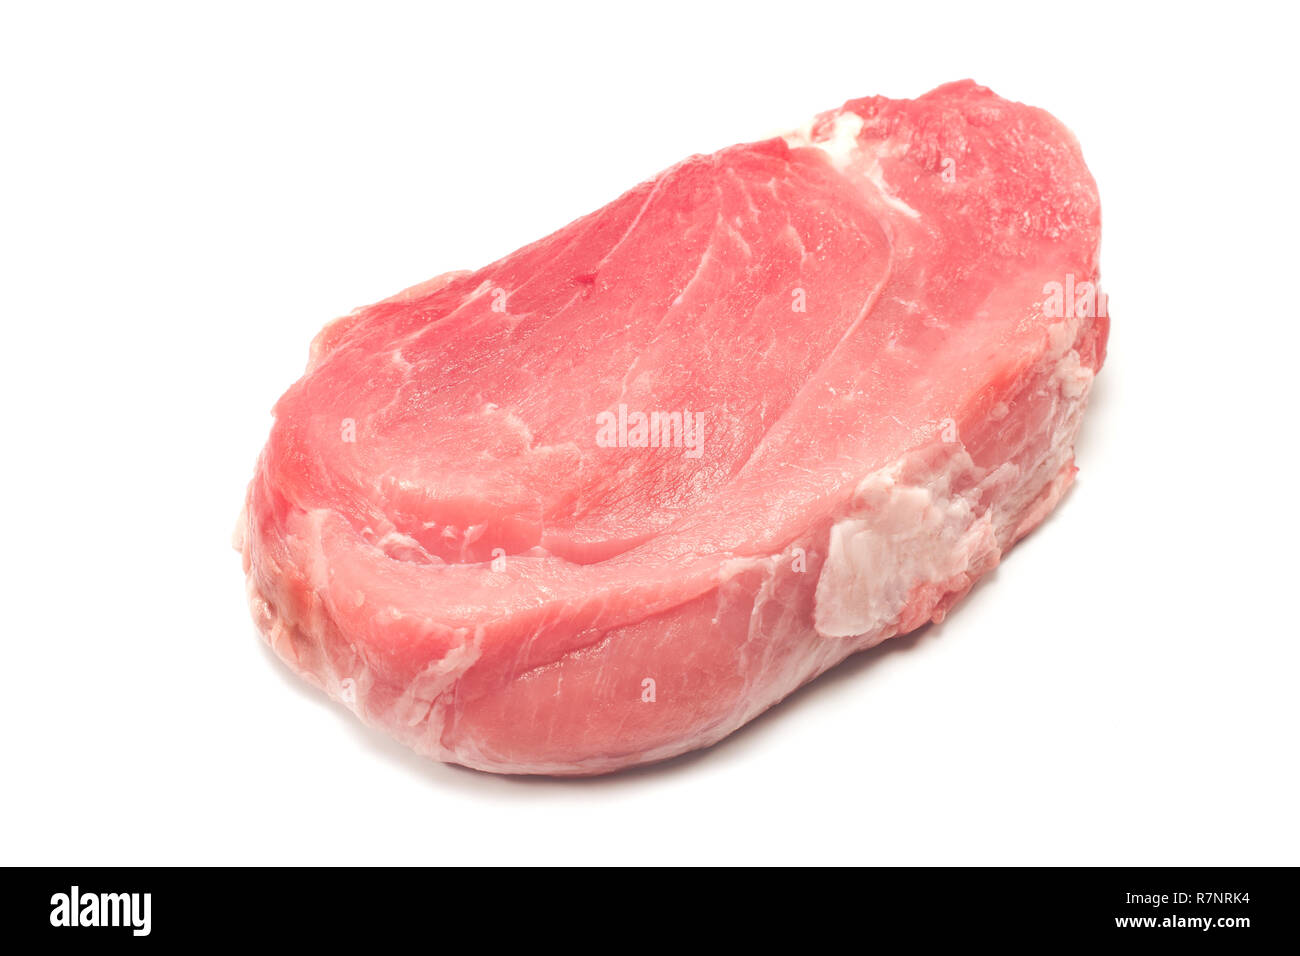 La carne de cerdo cruda aislado sobre fondo blanco. Foto de stock